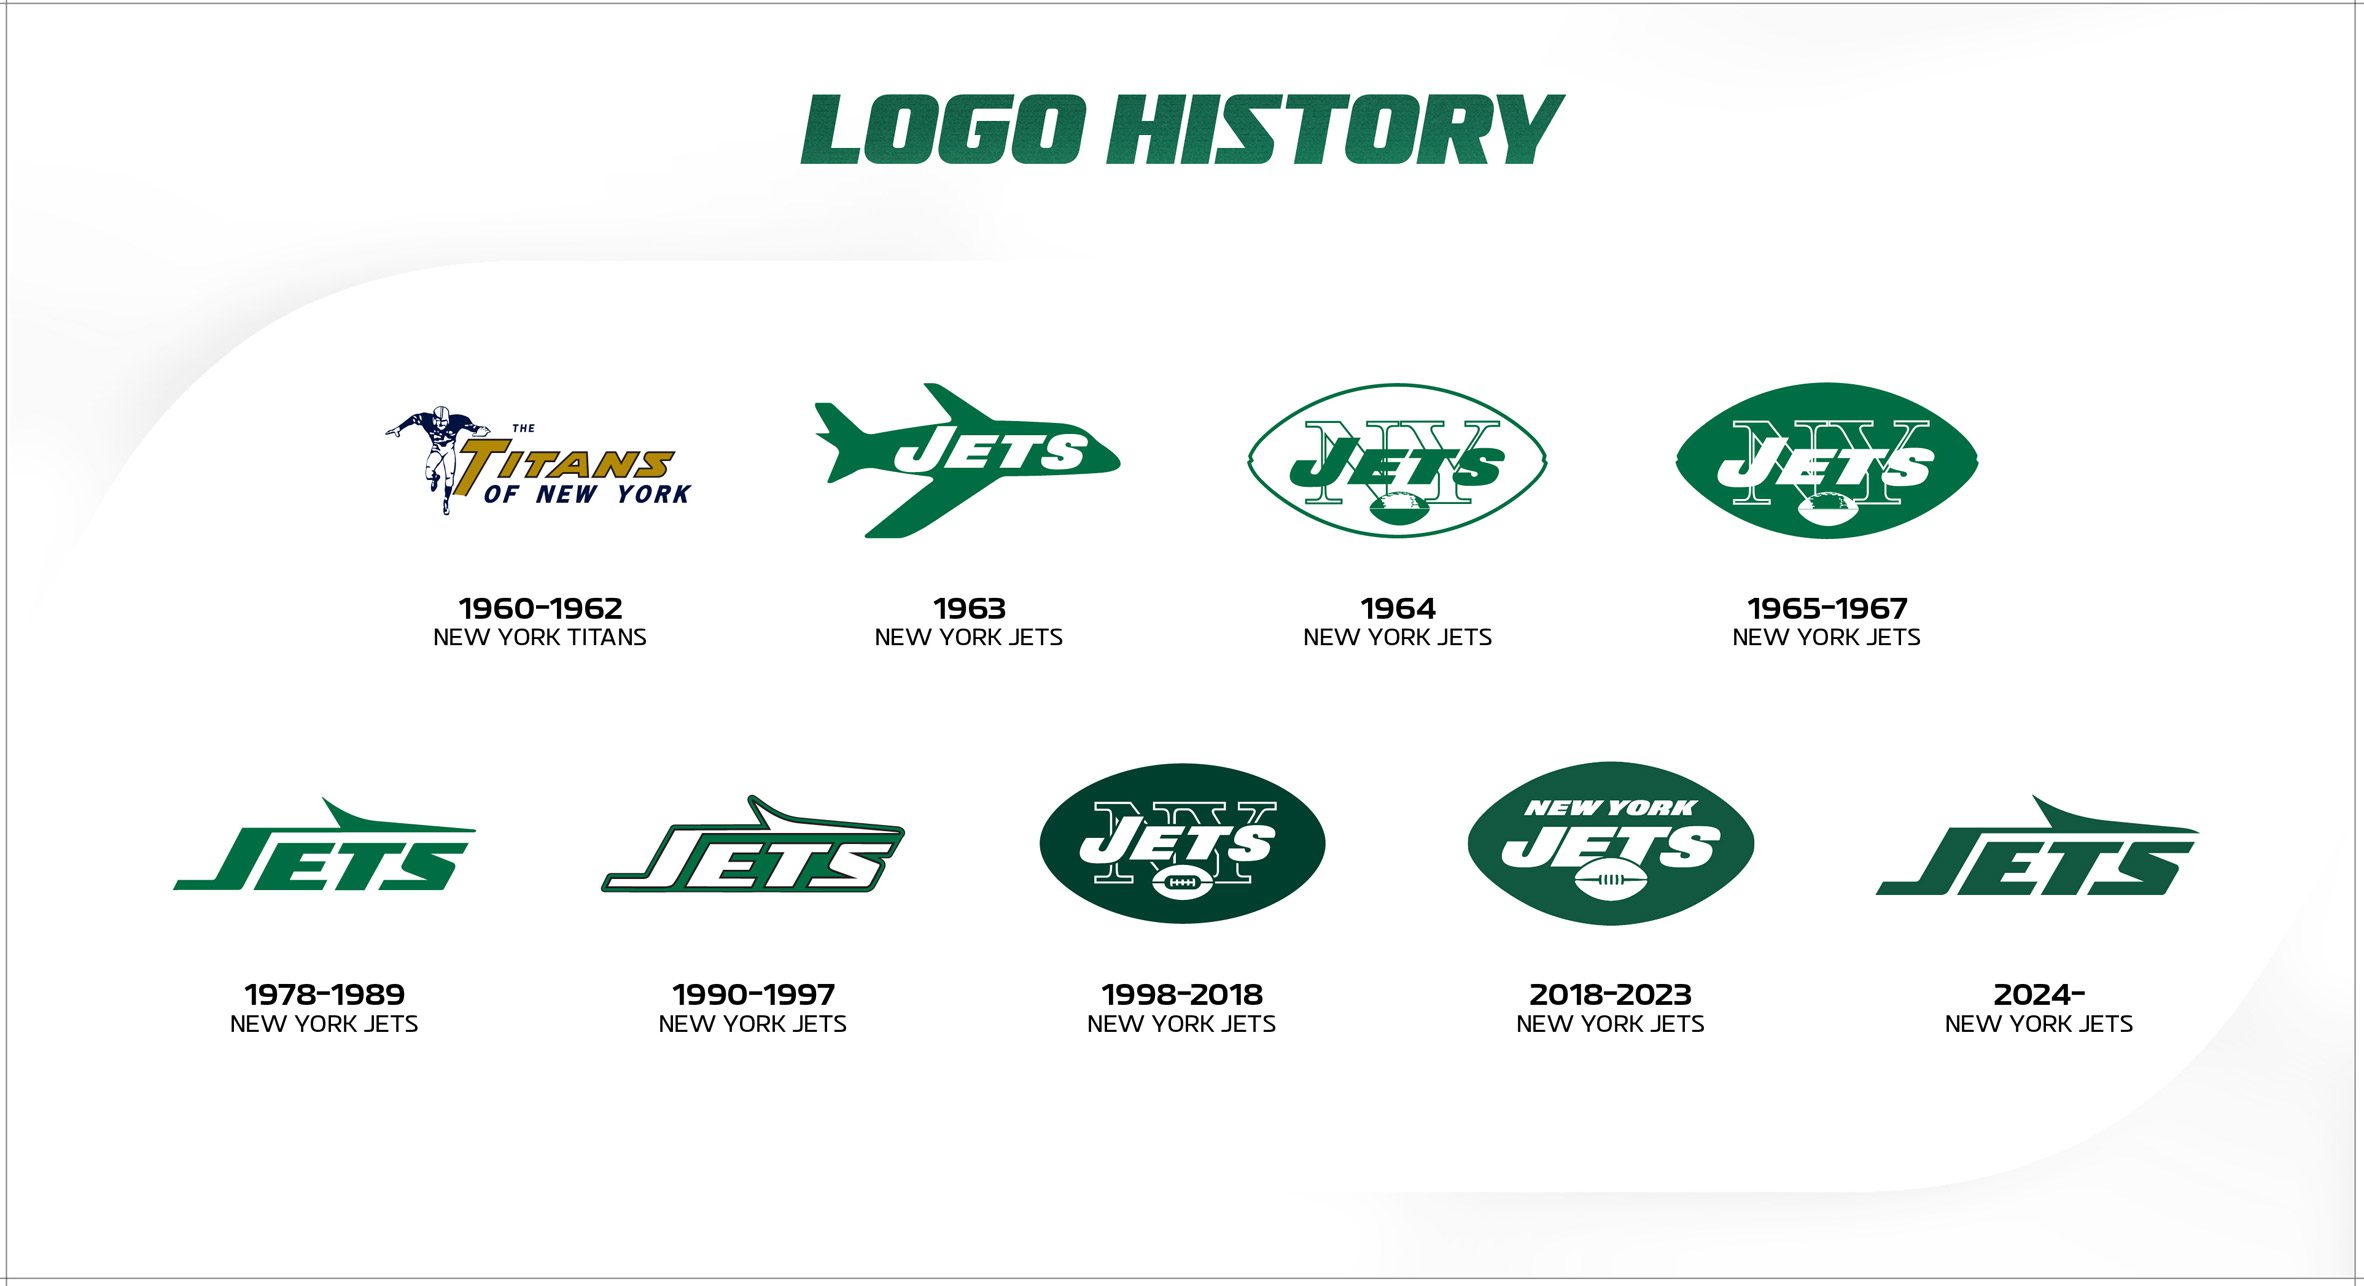 New York Jets logo and rebrand